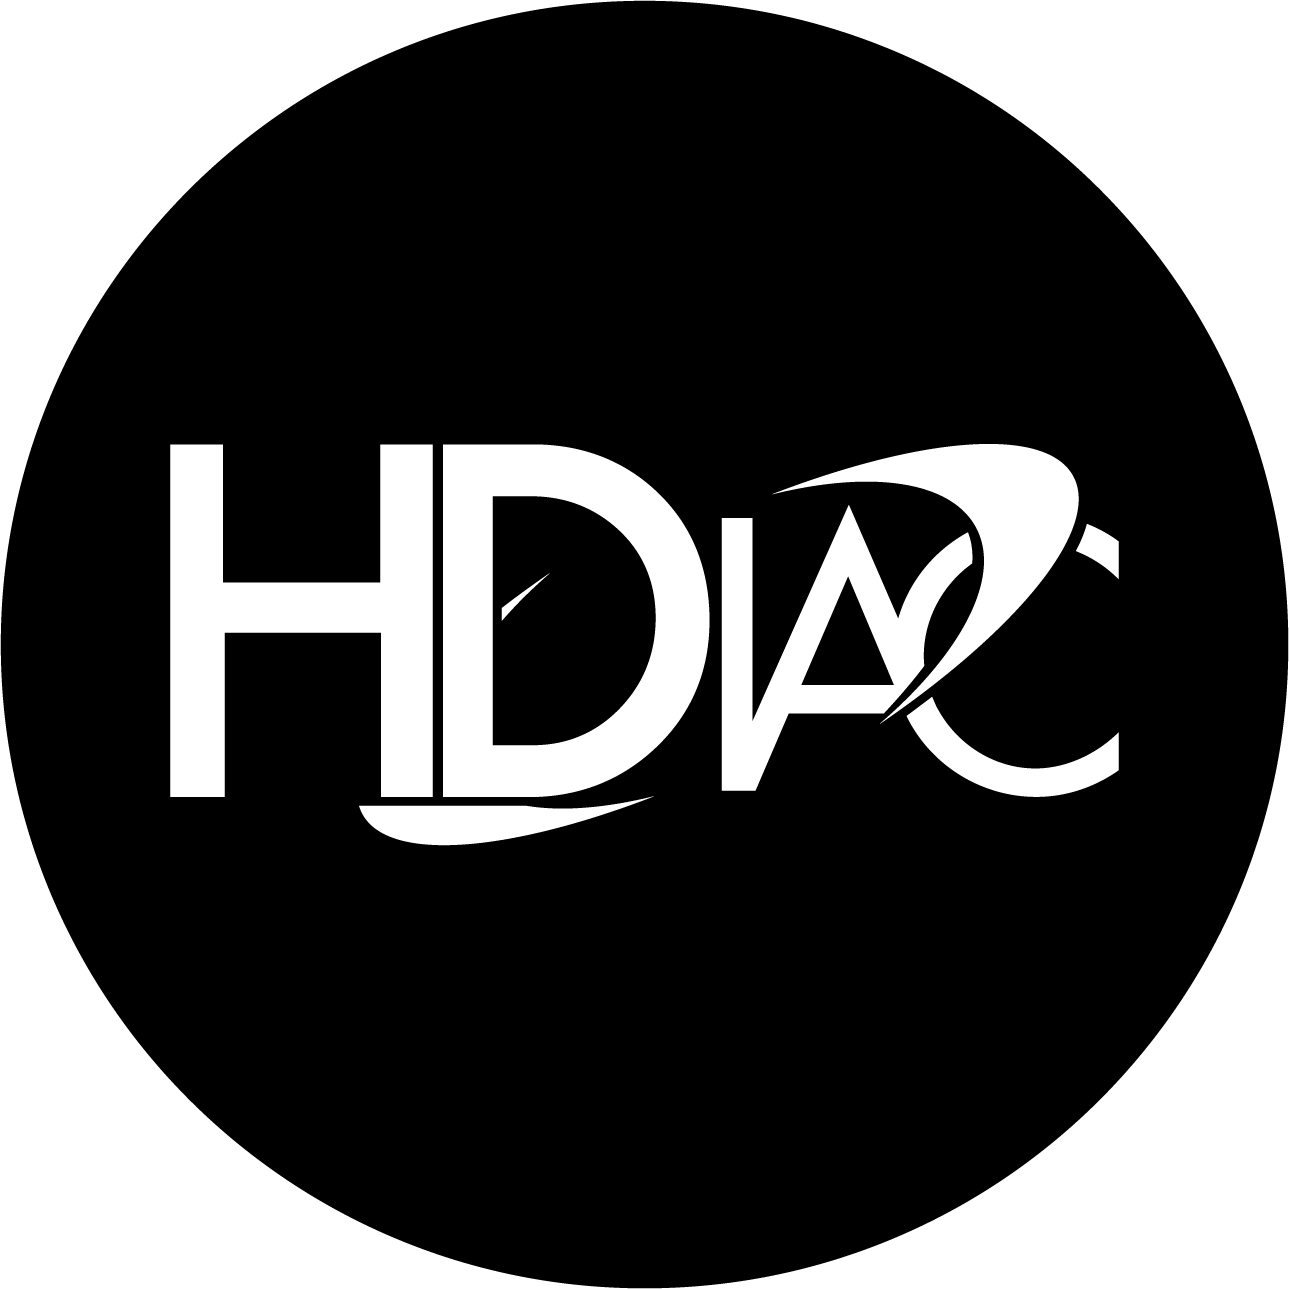 HDIAC White_Black Circle logo